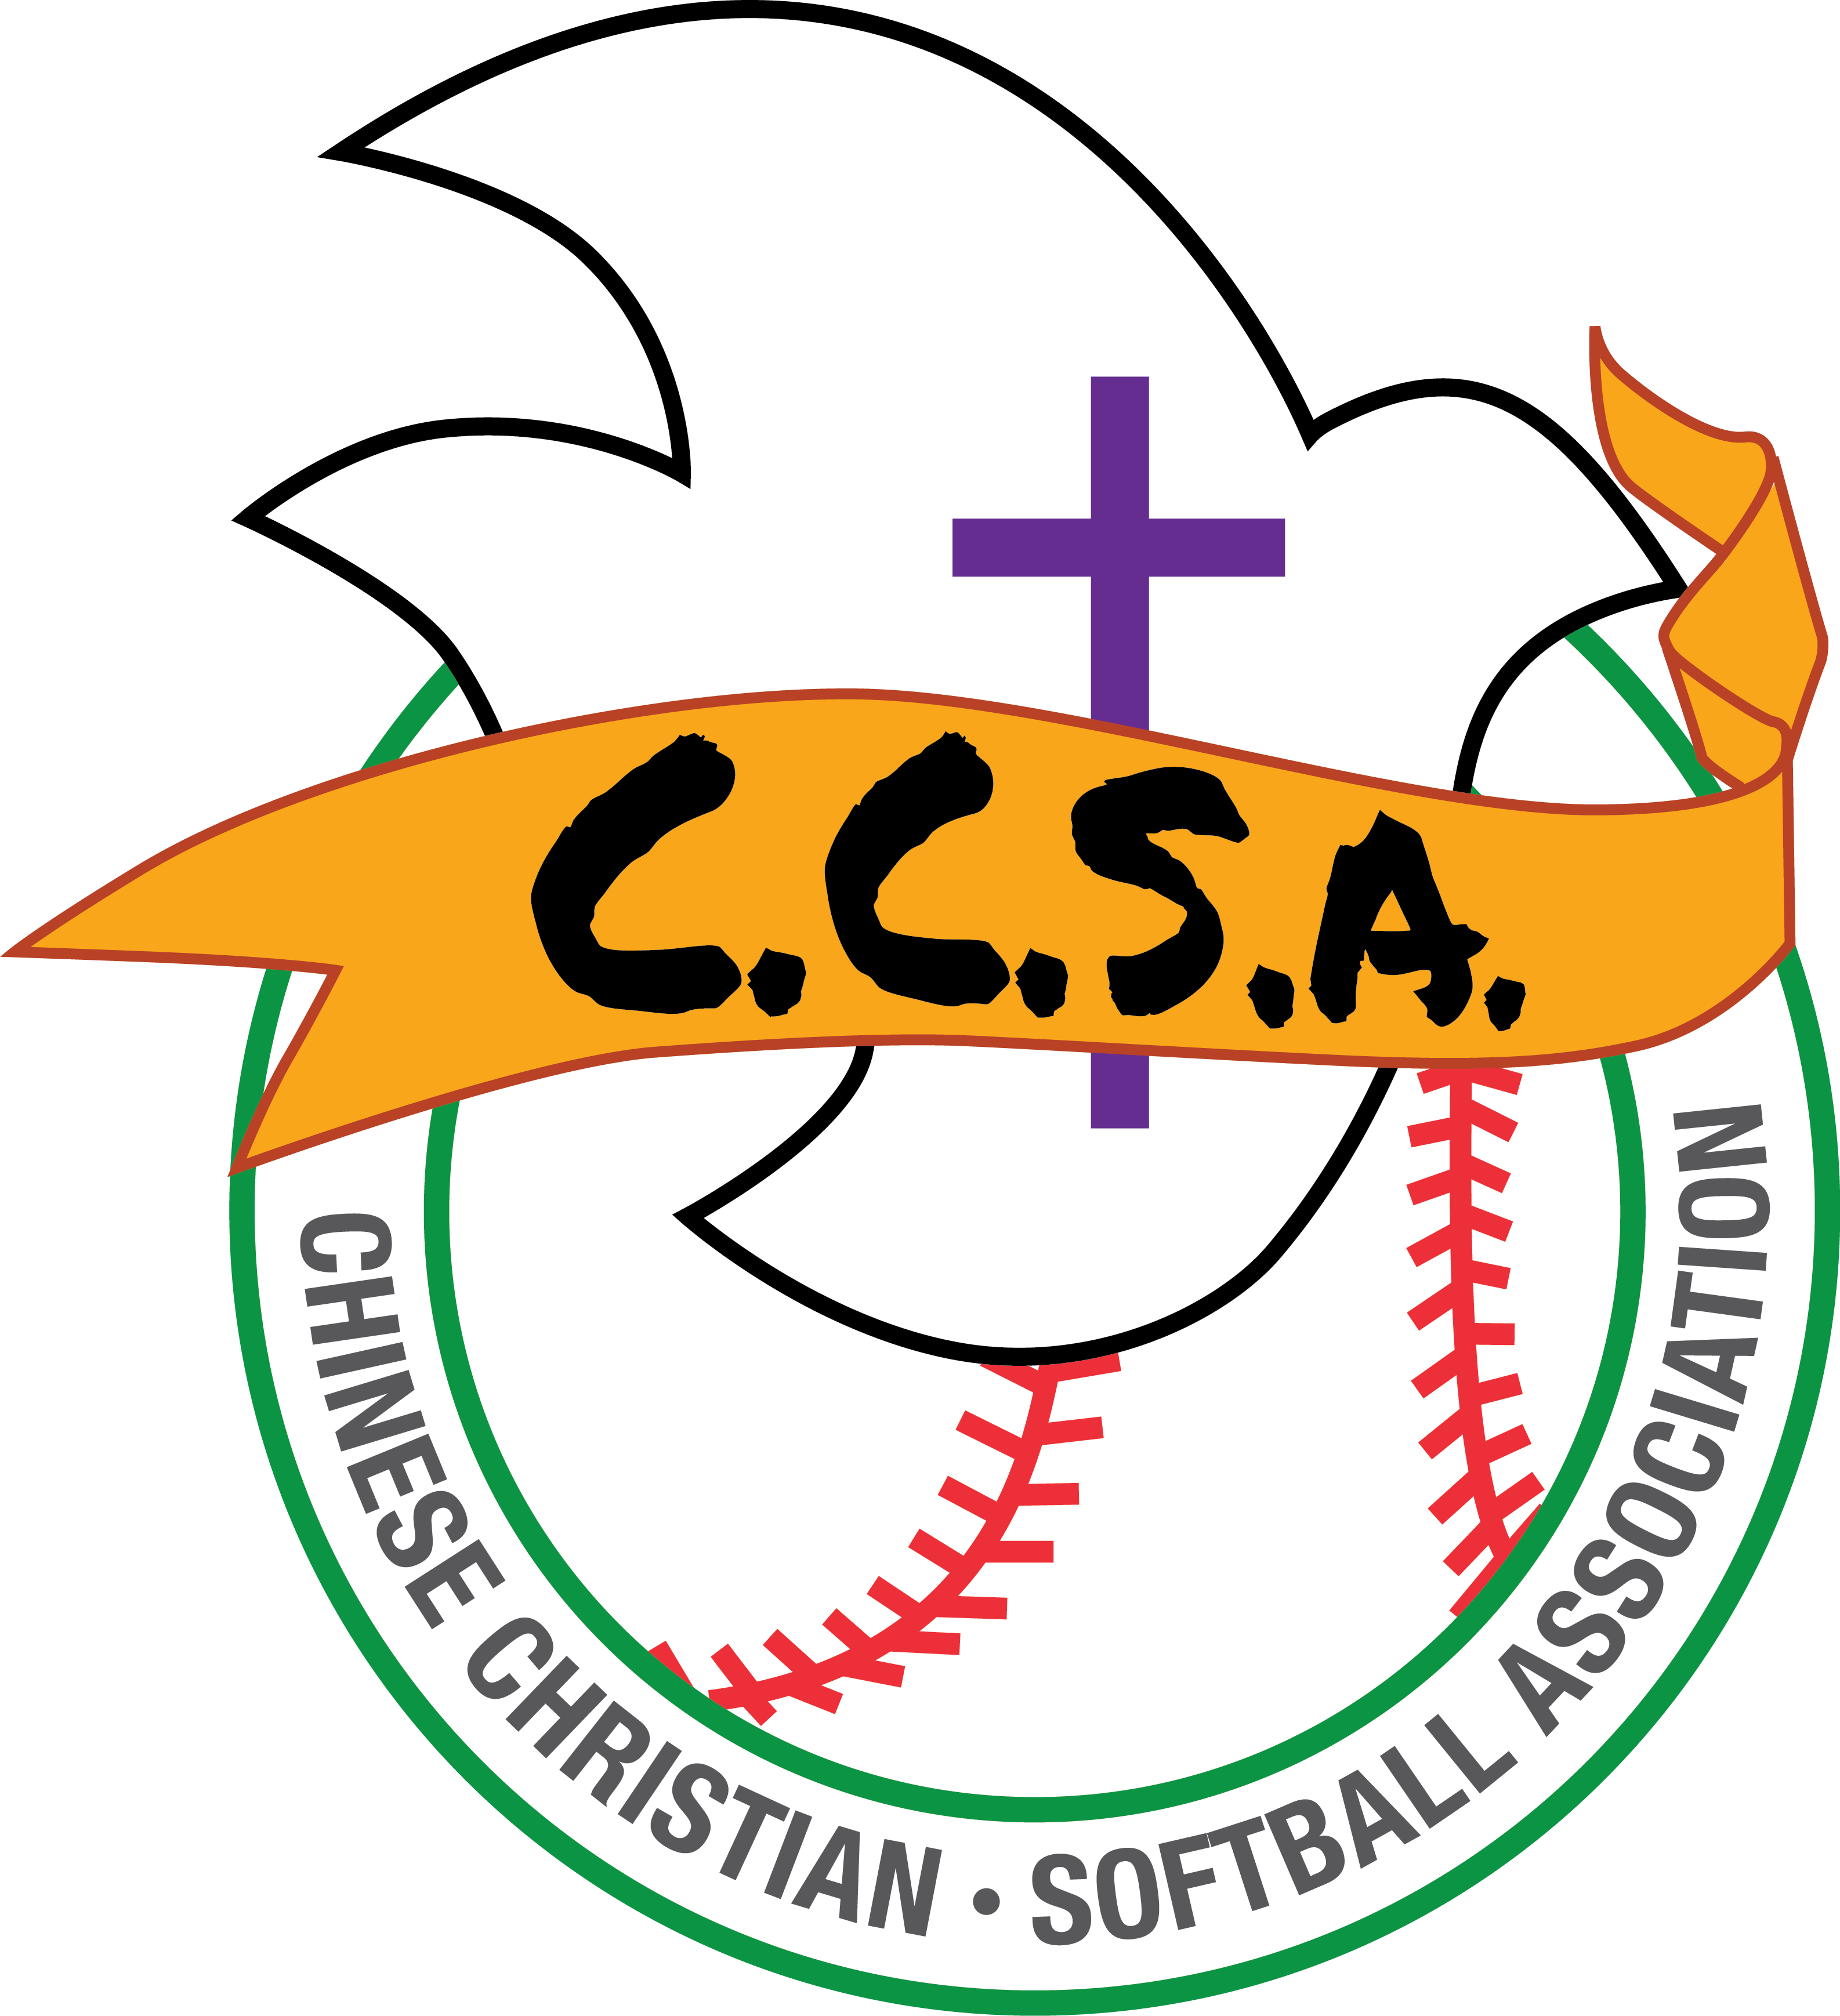 Chinese Christian Softball Association - Softball (3172x3476)